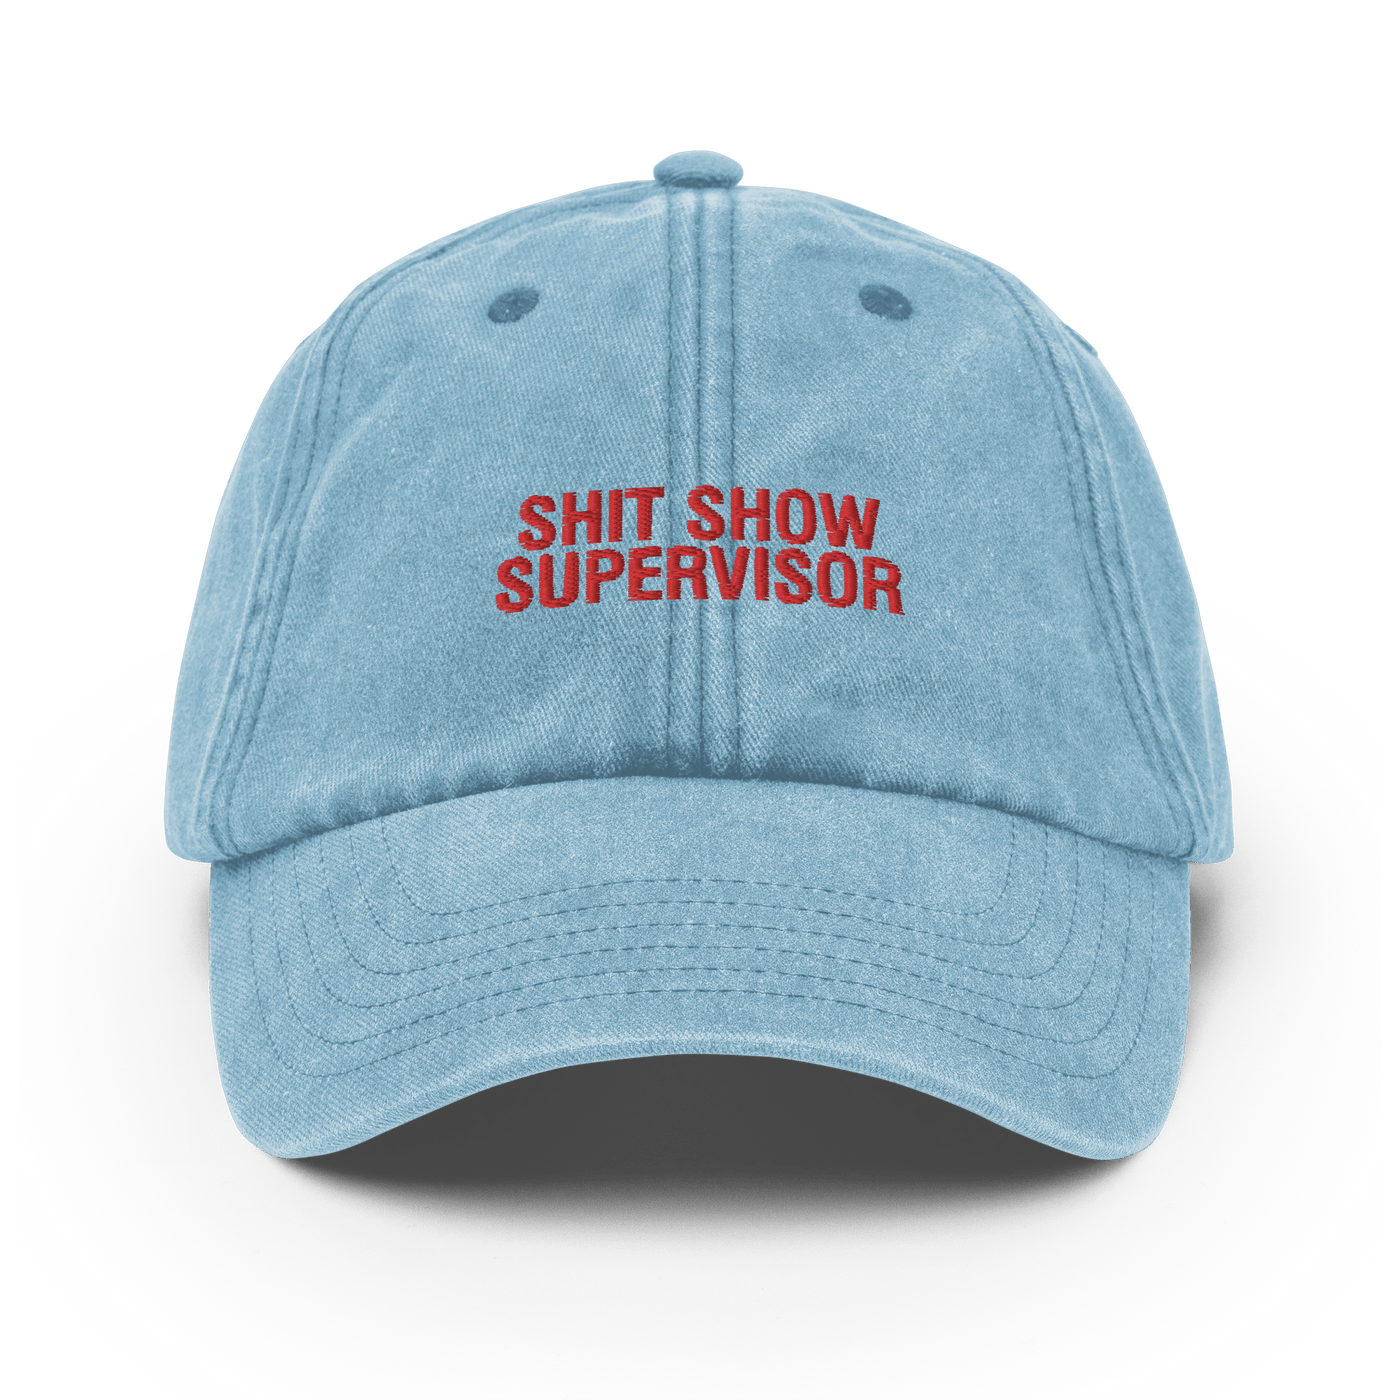 Shit Show Supervisor Vintage Hat - Vintage Light Denim - Just Another Cap Store